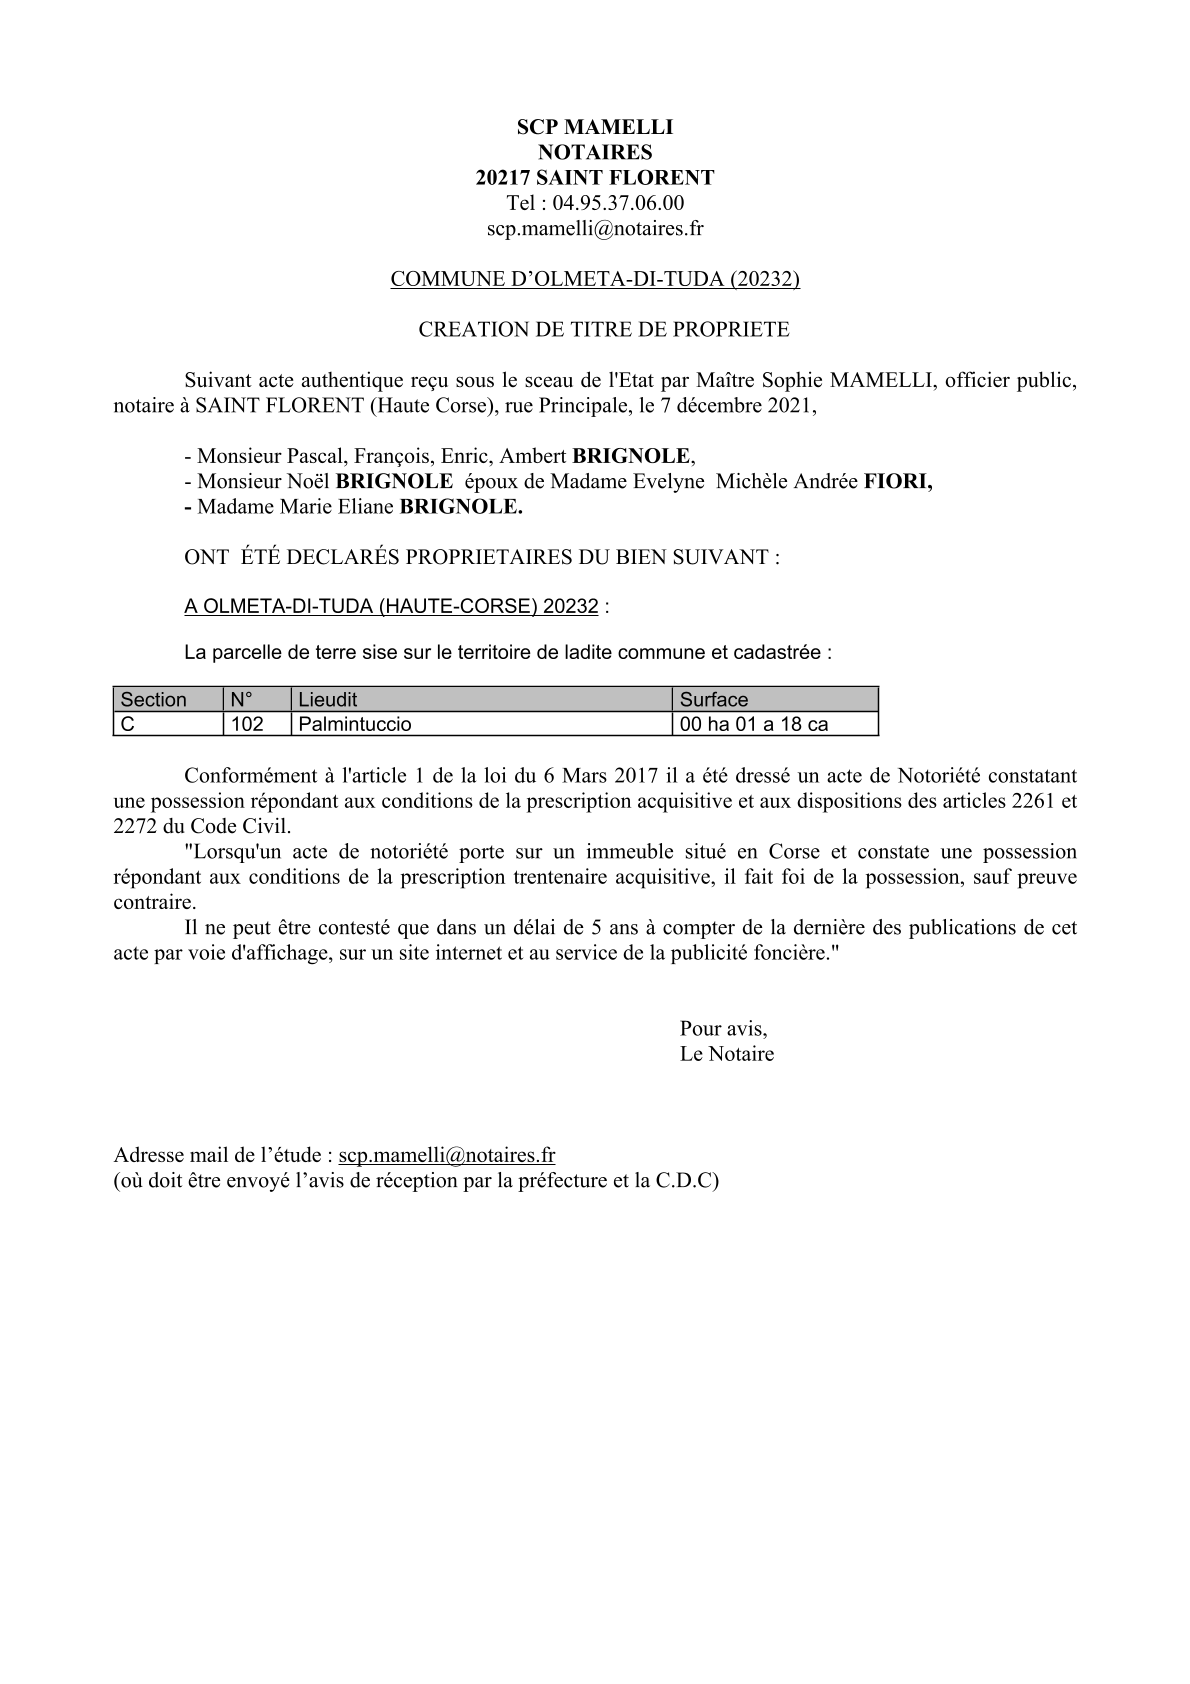 Avis de création de titre de propriété - Commune d'Olmeta di Tuda (Haute-Corse)